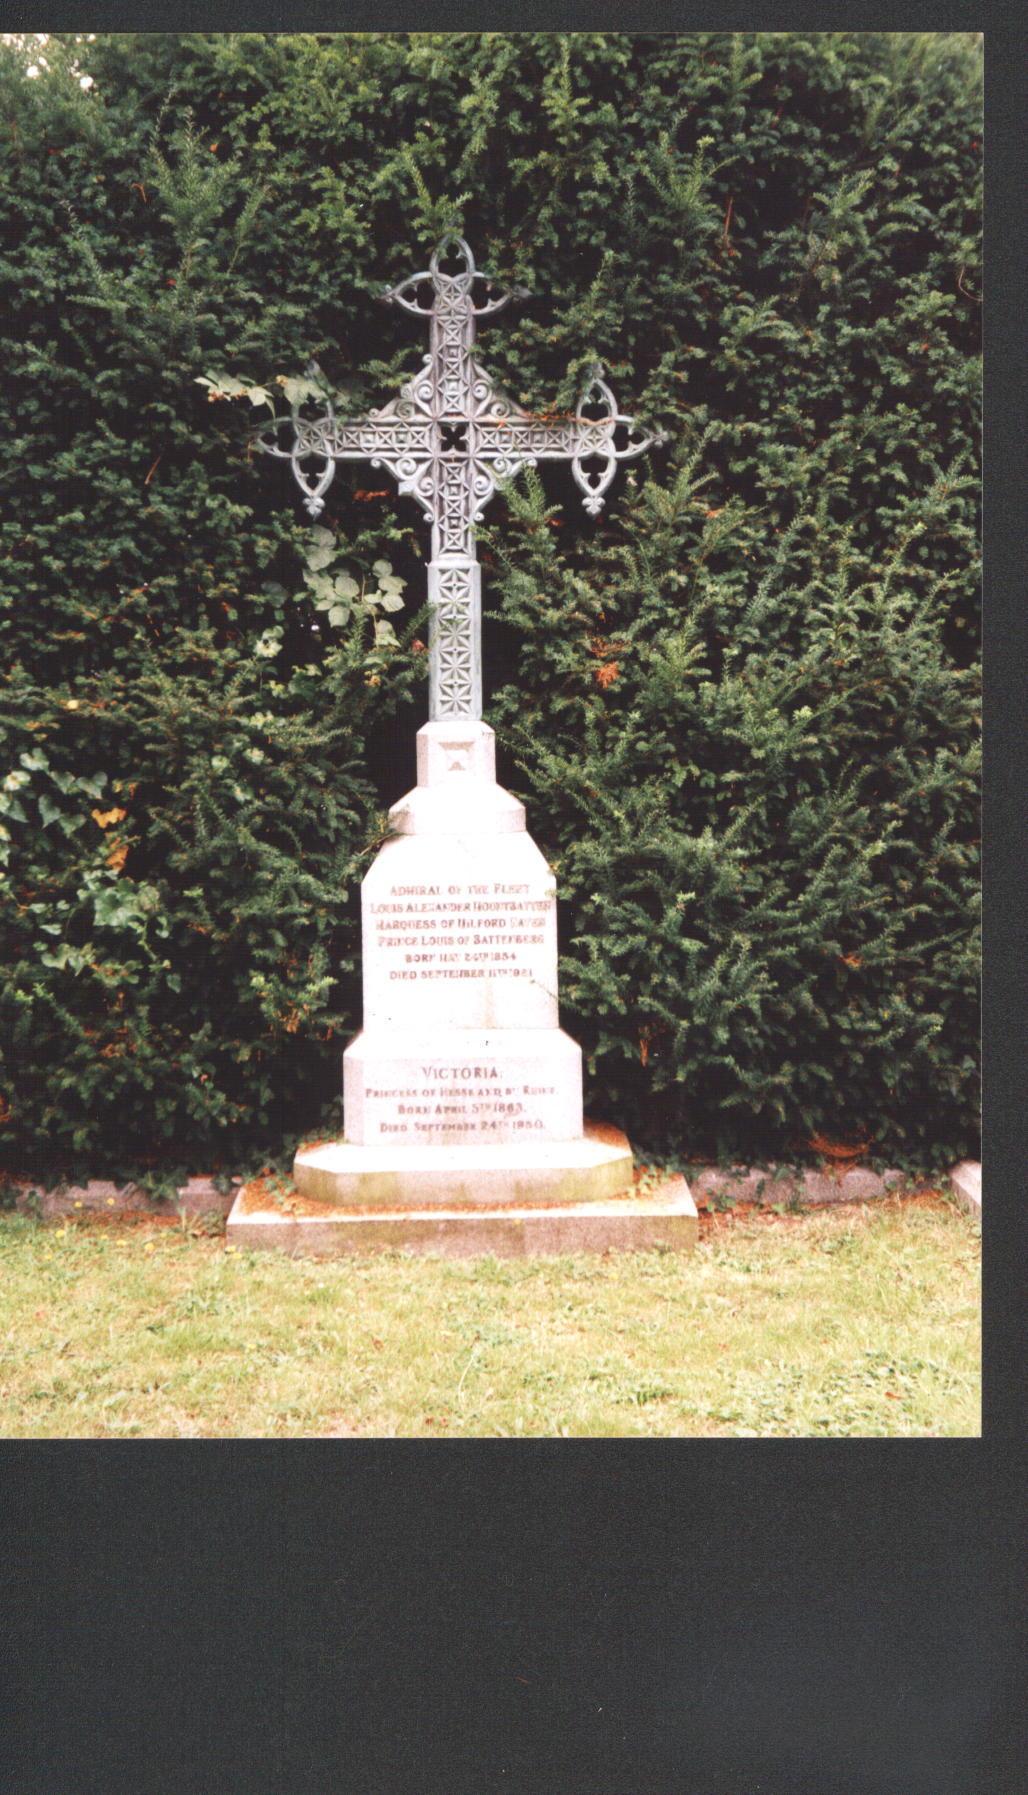 Iron Cross marking their grave